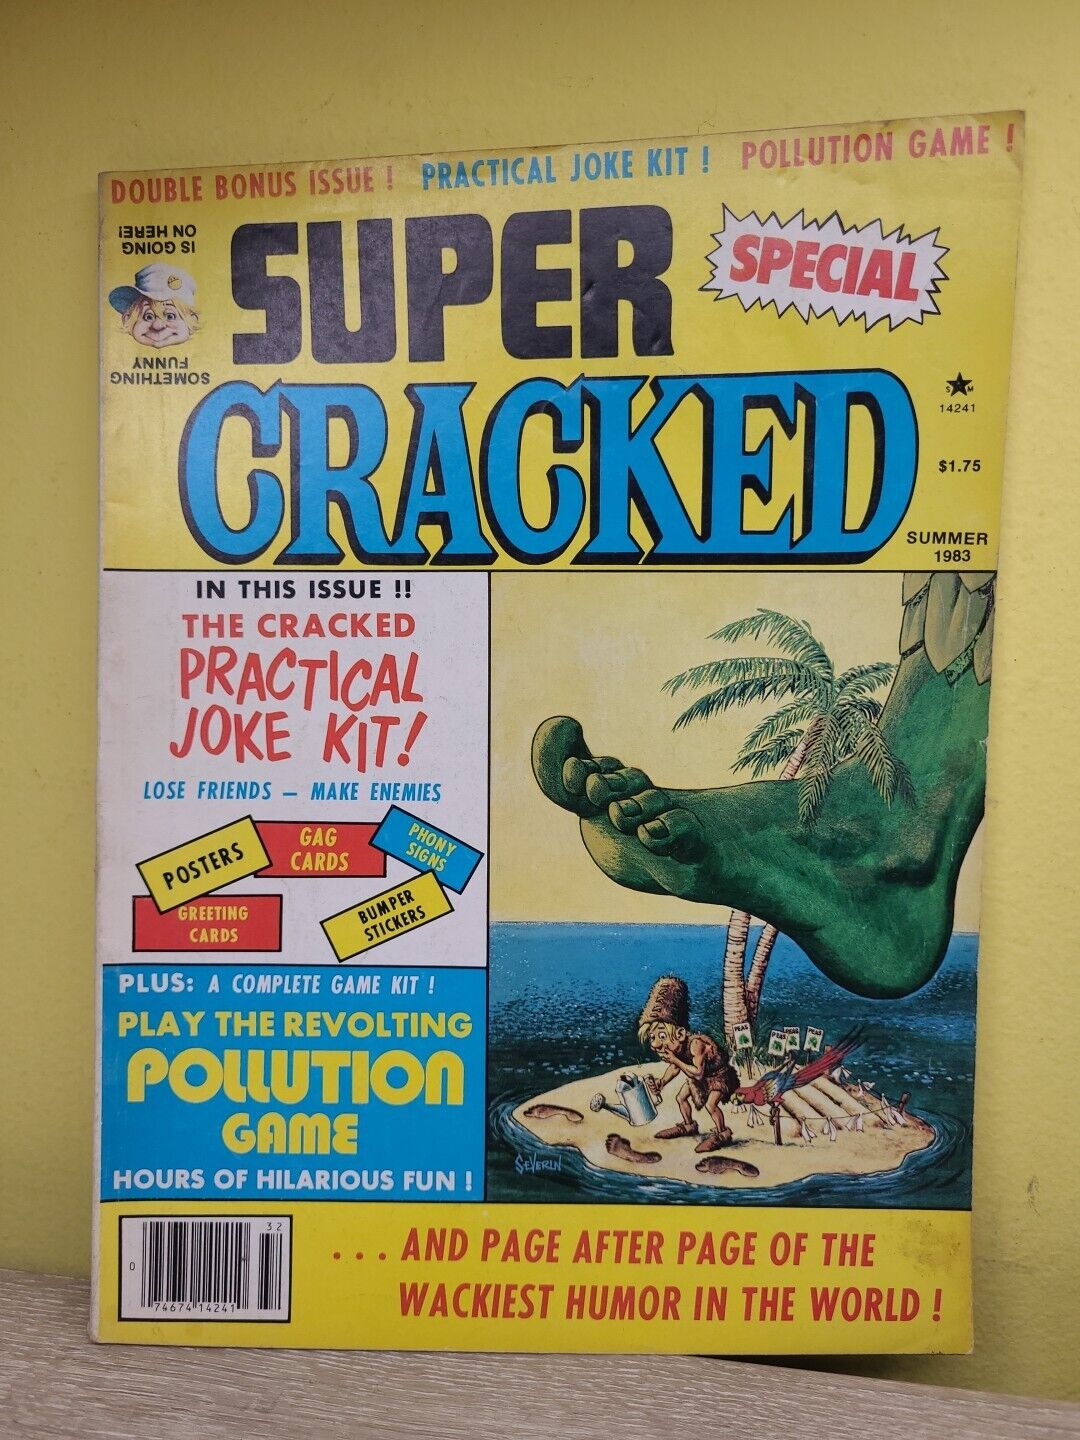 Super Cracked Magazine - Summer 1983 Special. Practical Joke Kit